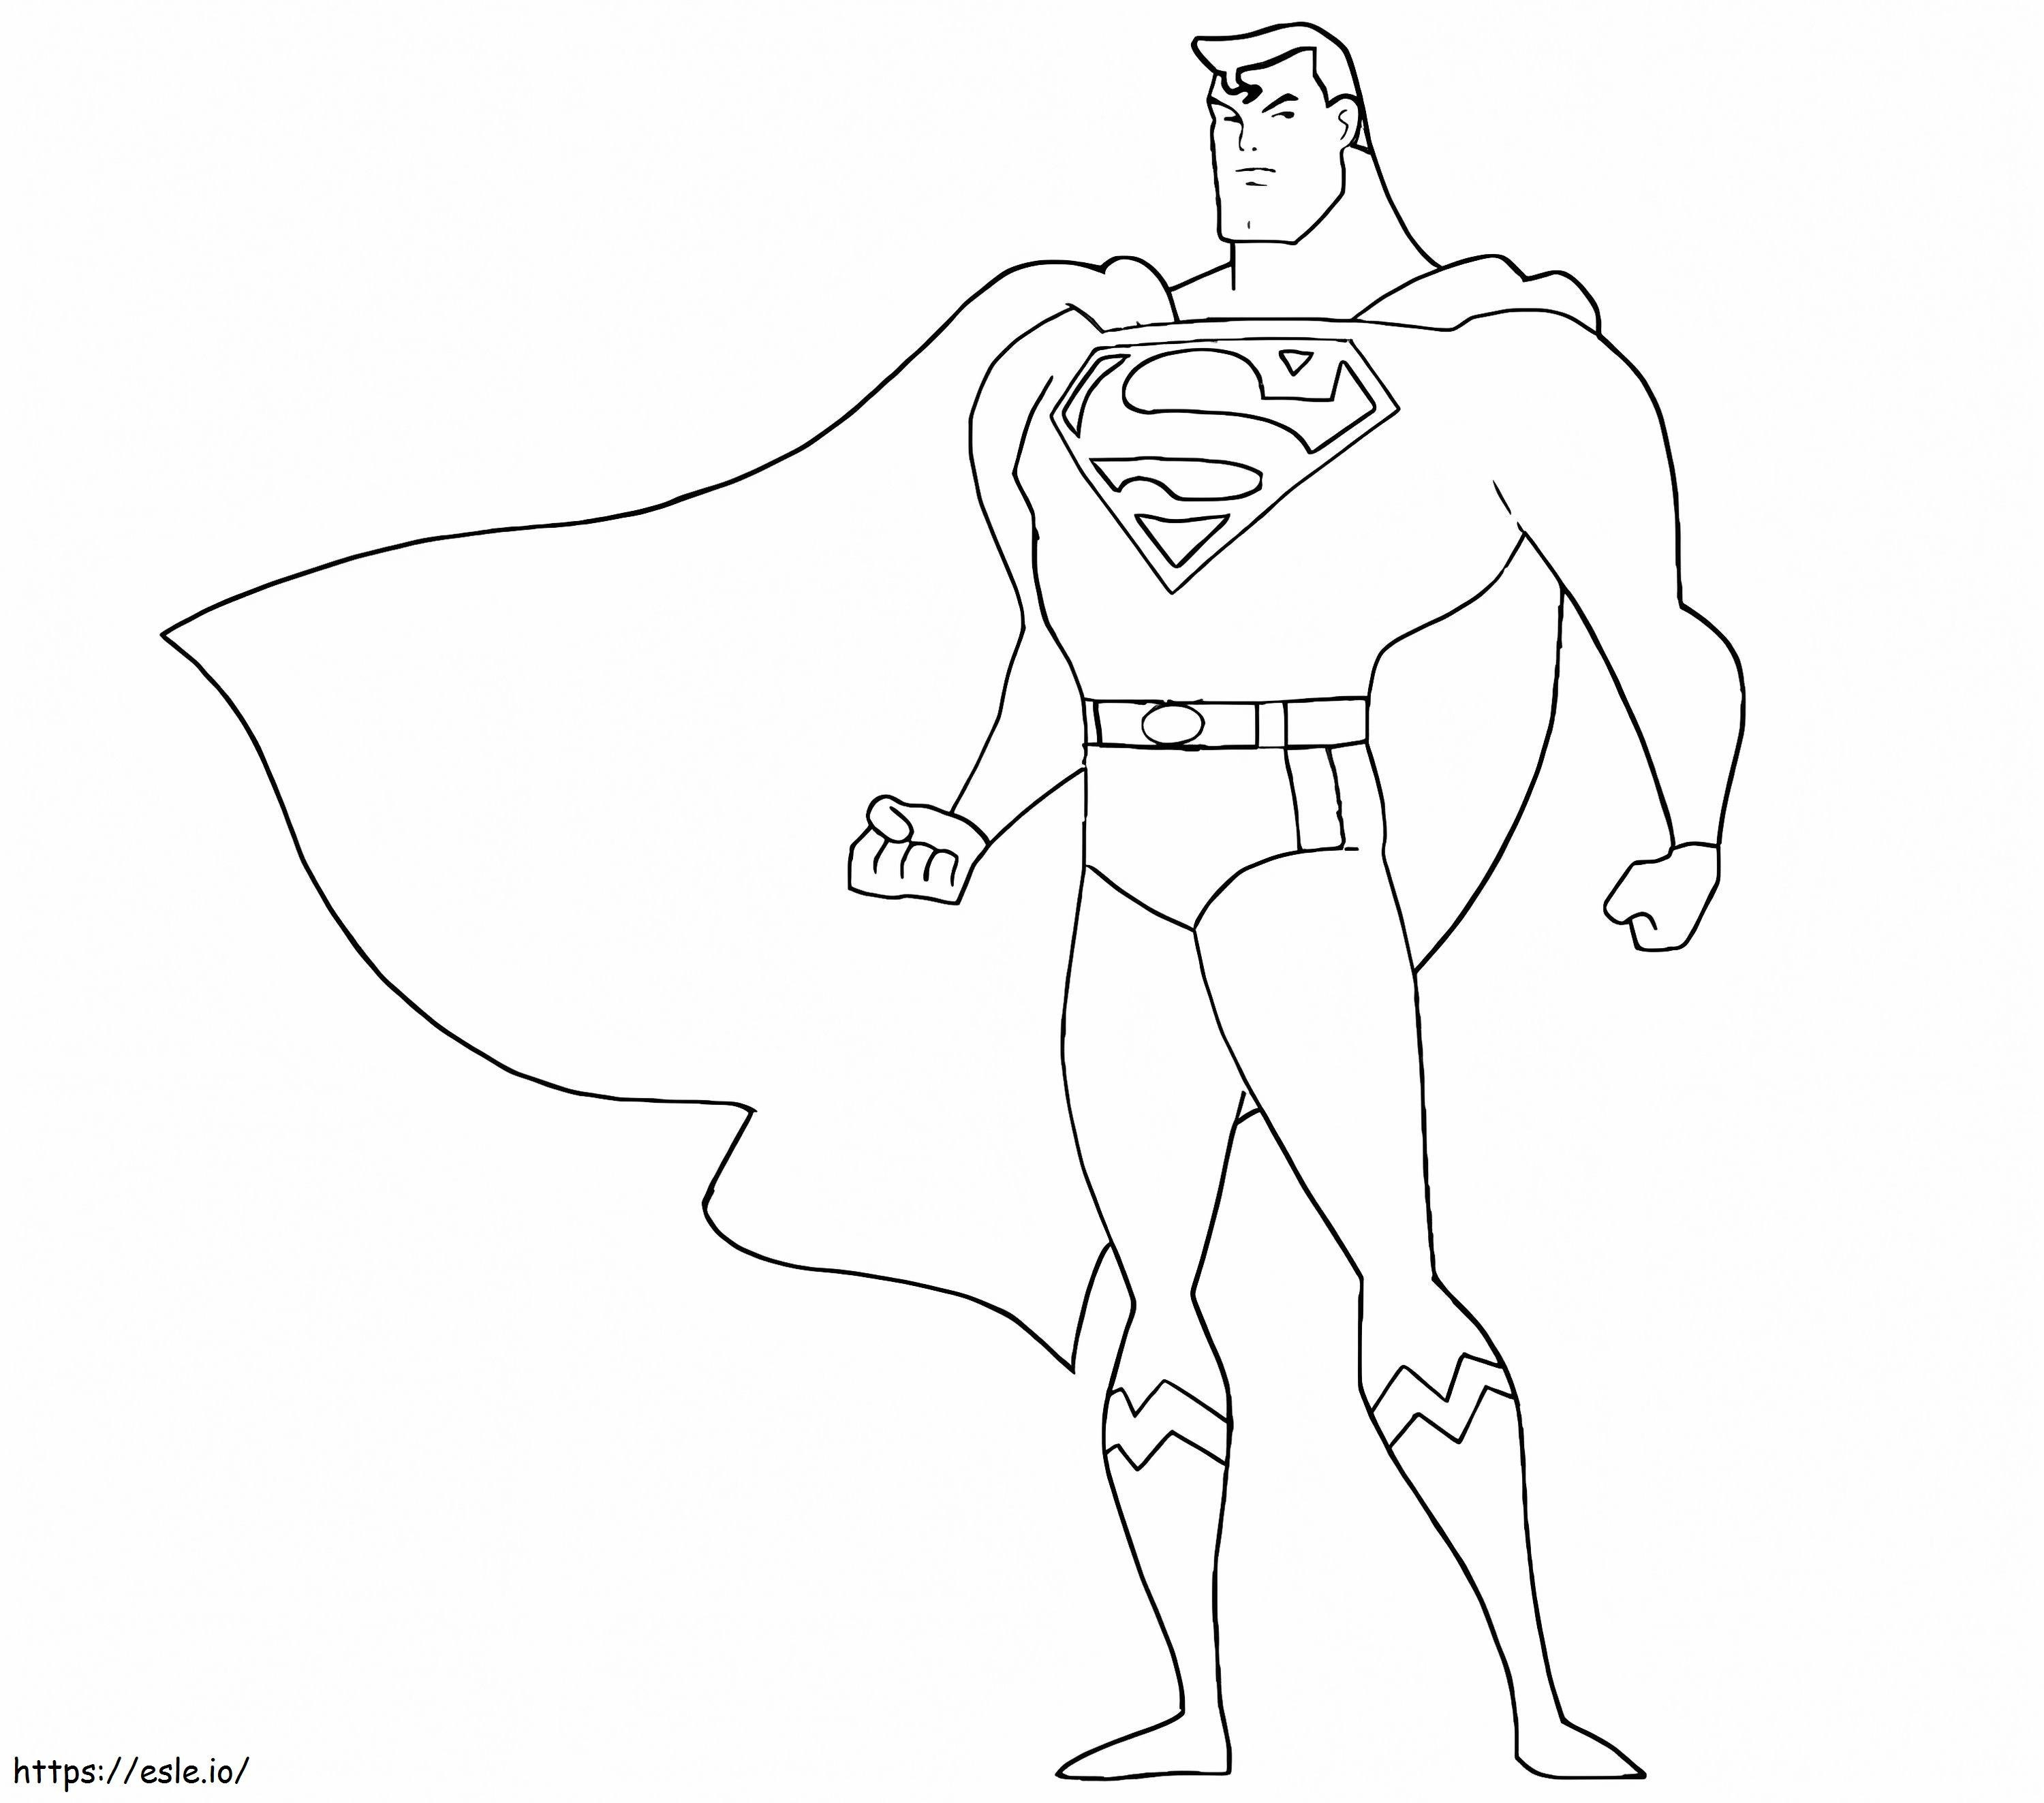 Superman animat de colorat